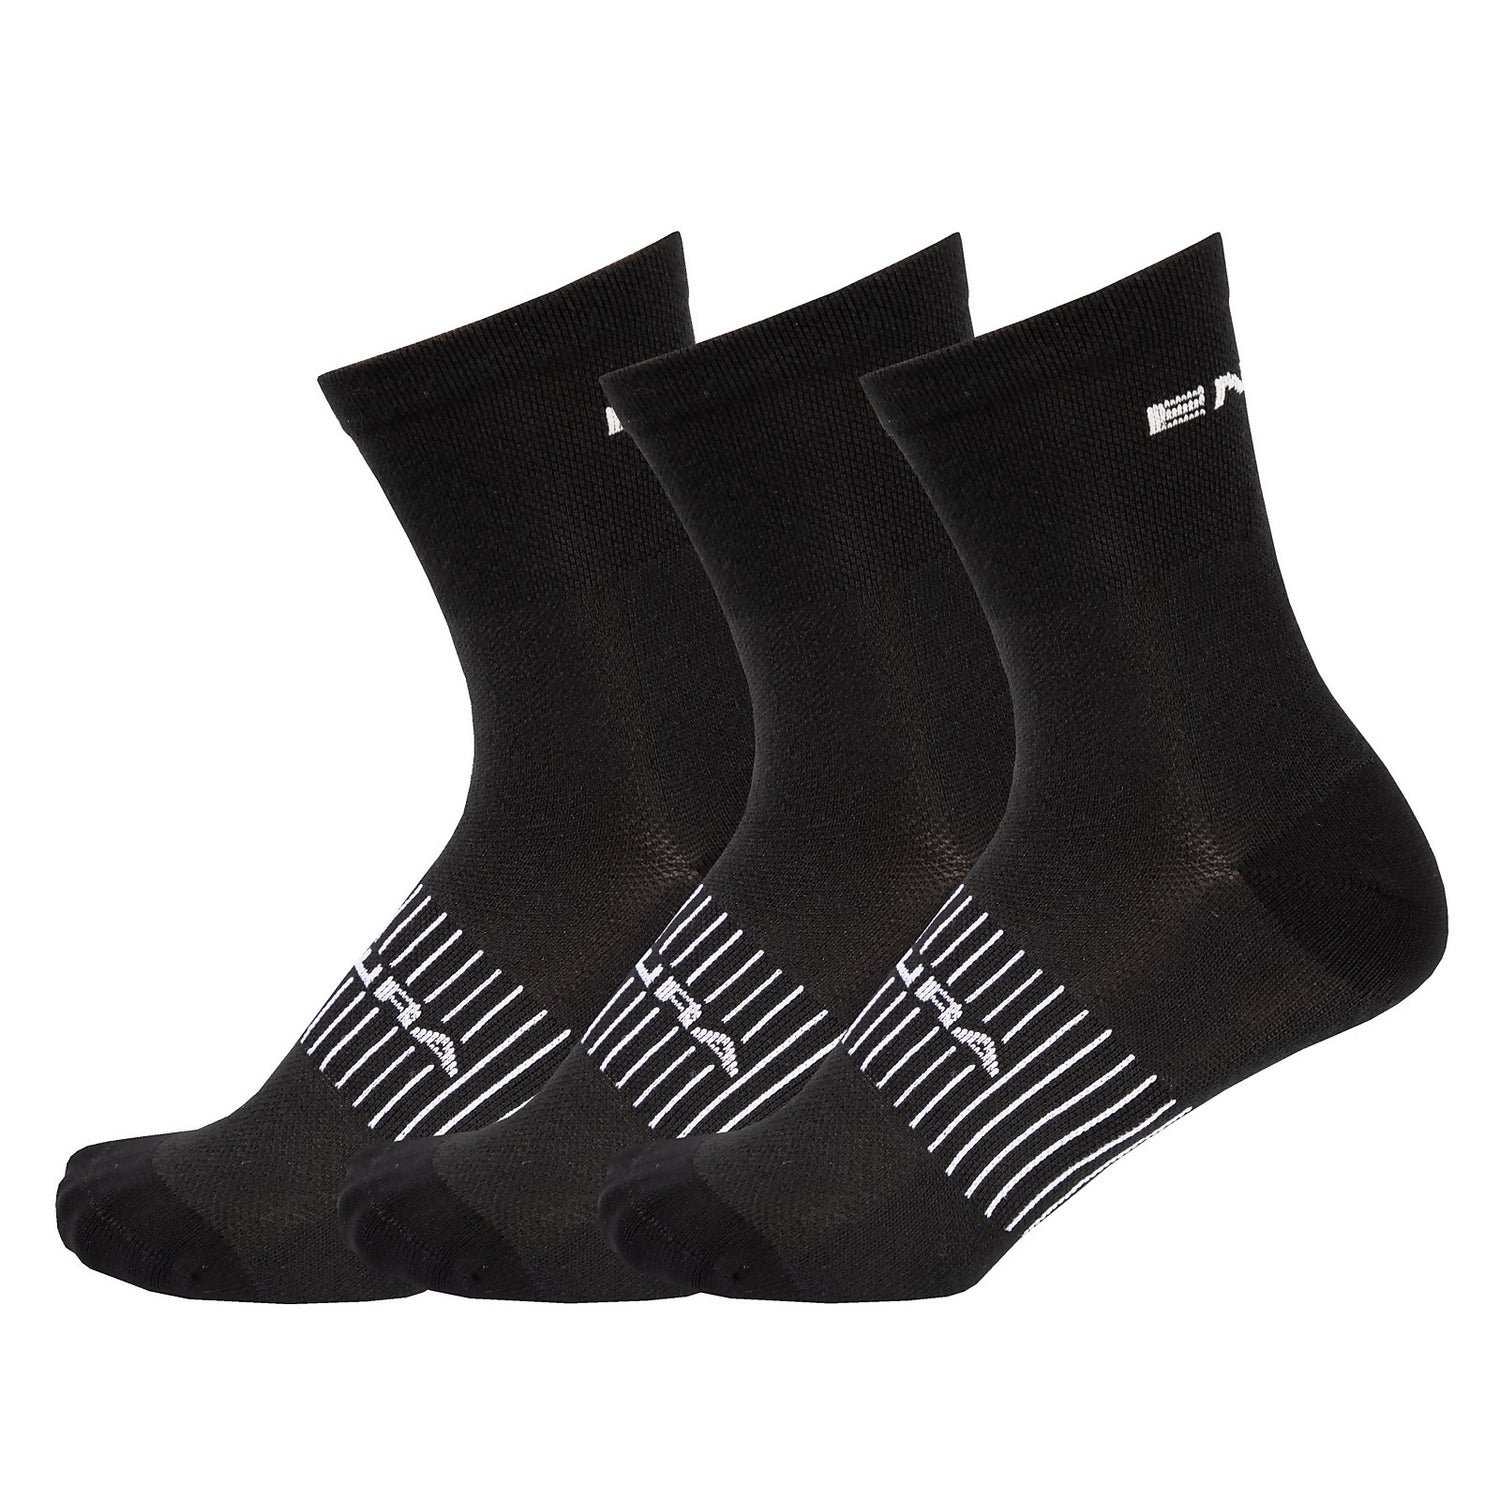 Endura e1265bk 0 calcetines coolmax race sock triple pack mujer negro